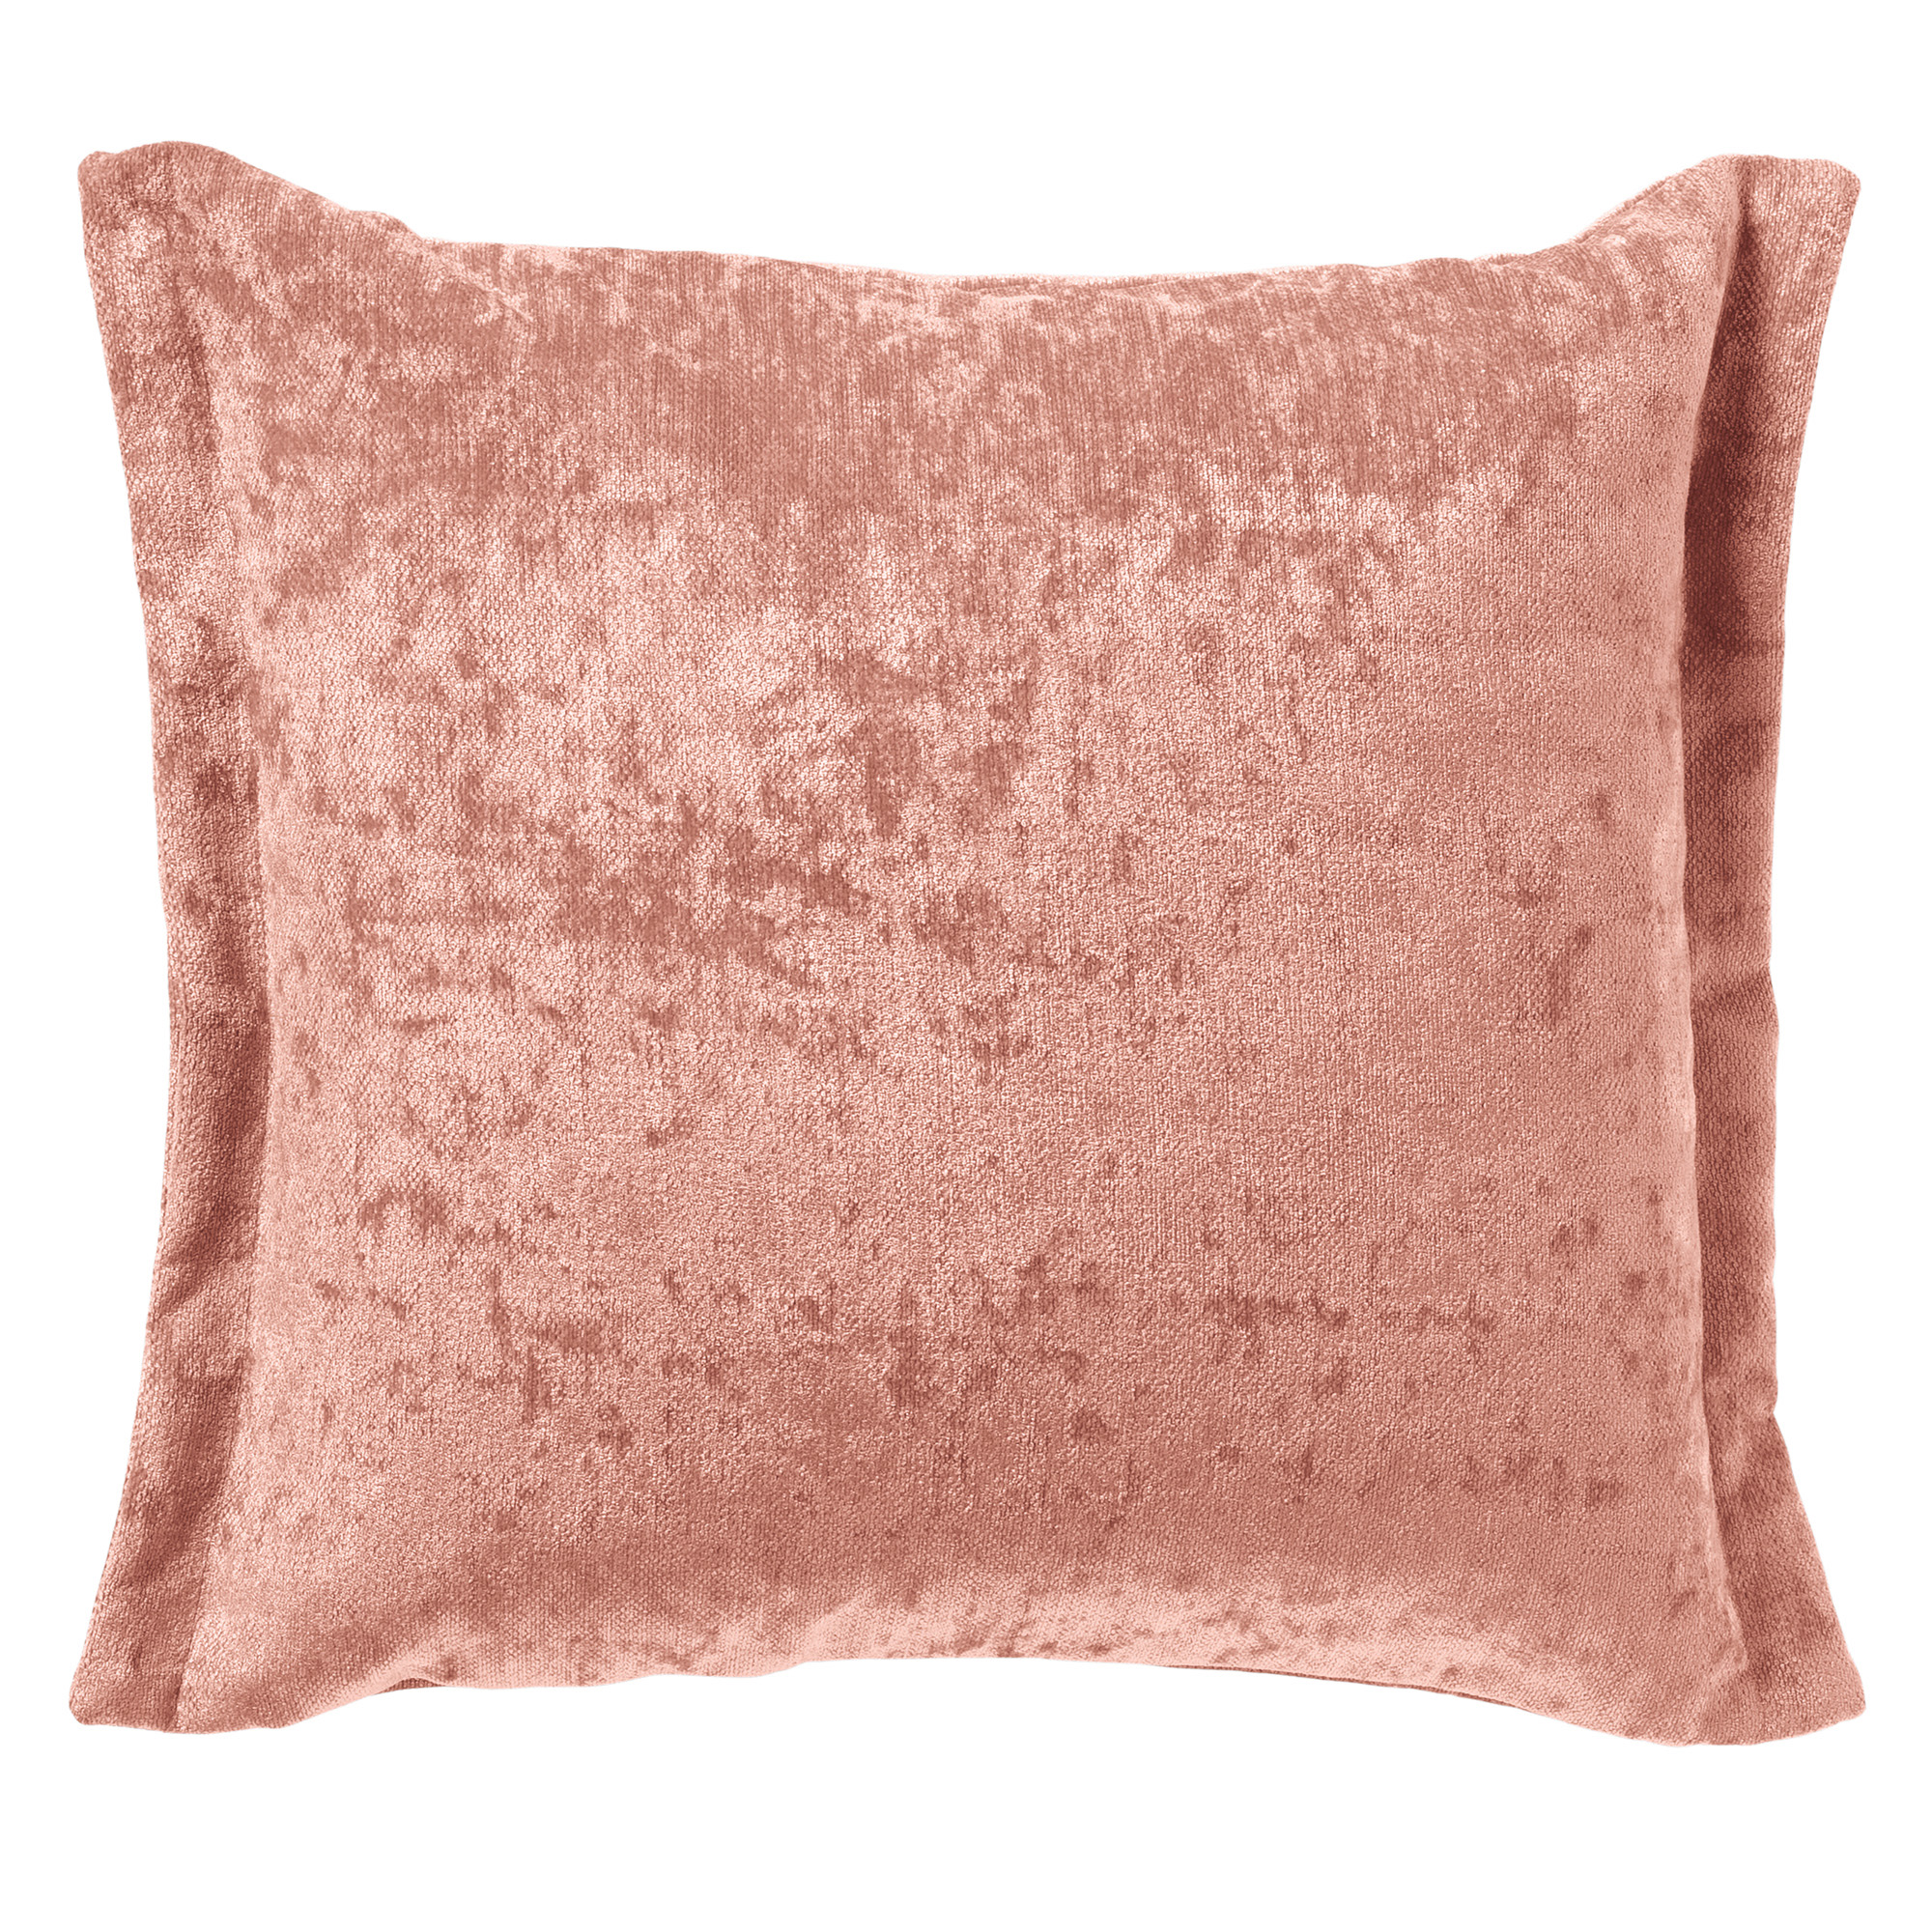 VOORDEELSET - Femm & Lewis & Belle - Muted Clay  - roze  | Set van 3 stuks